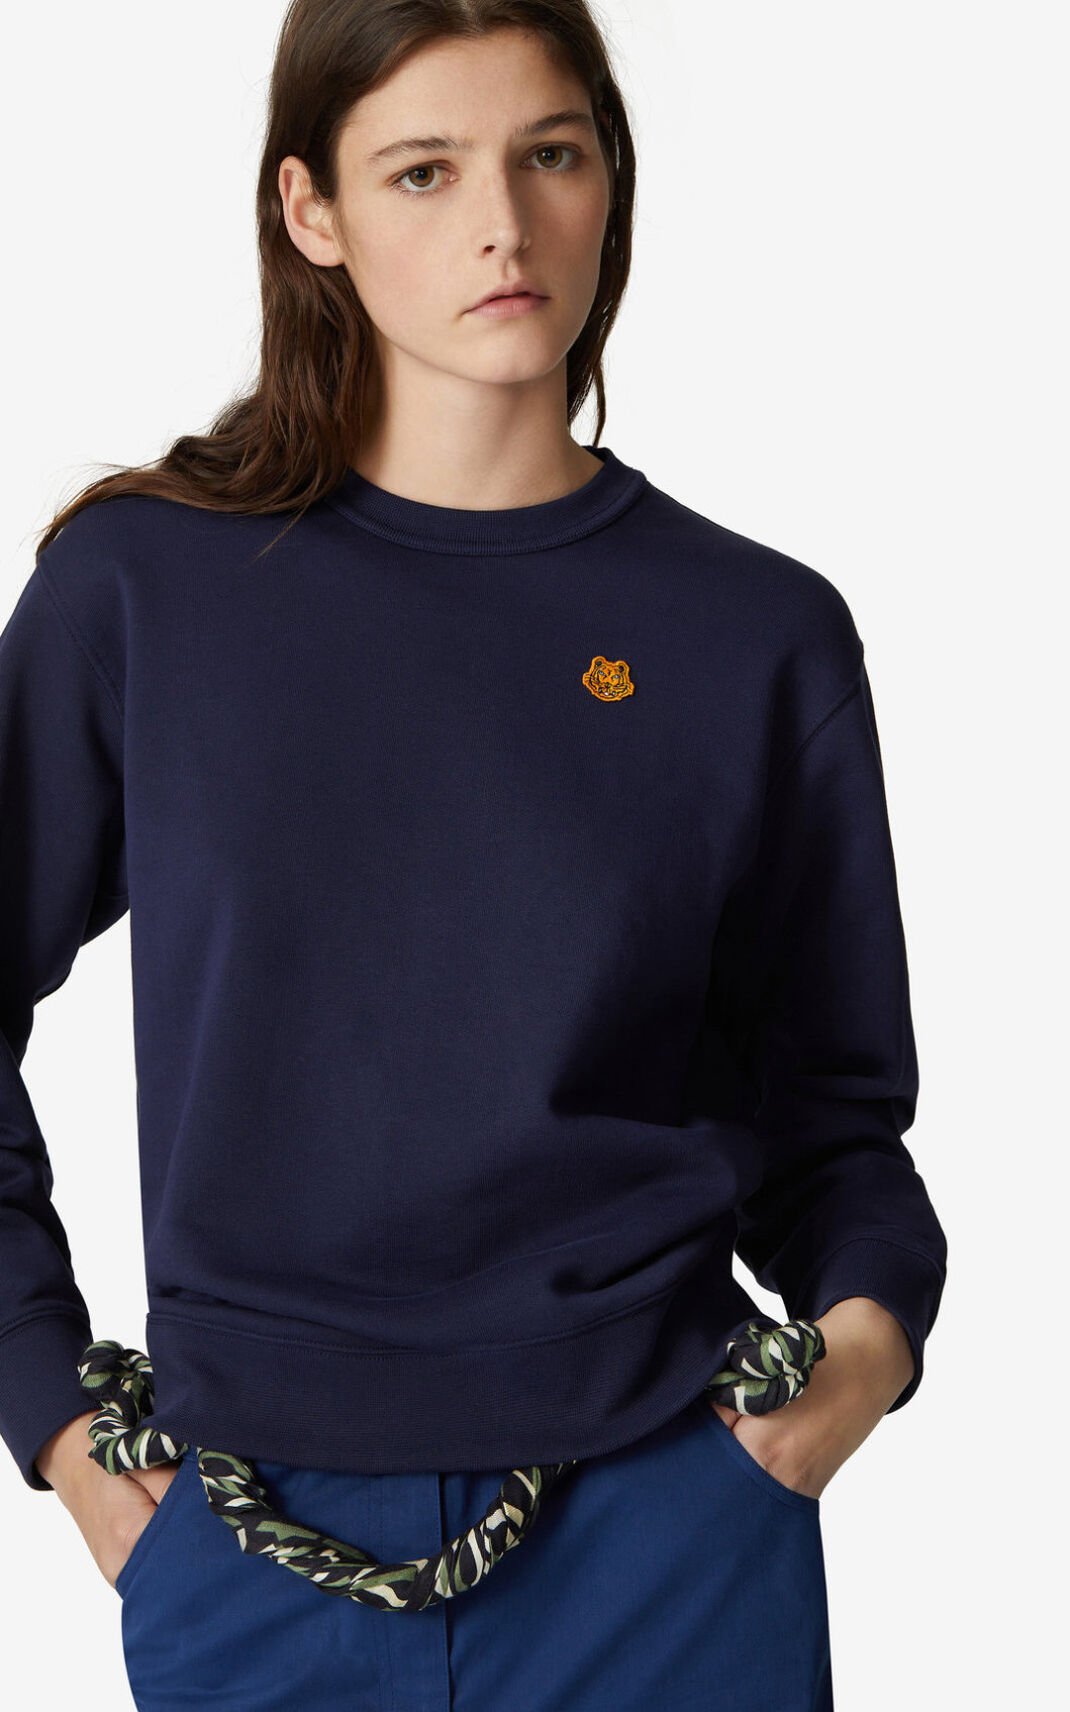 Kenzo Tiger Crest Sweatshirt Navy Blue For Womens 8426MIVWT